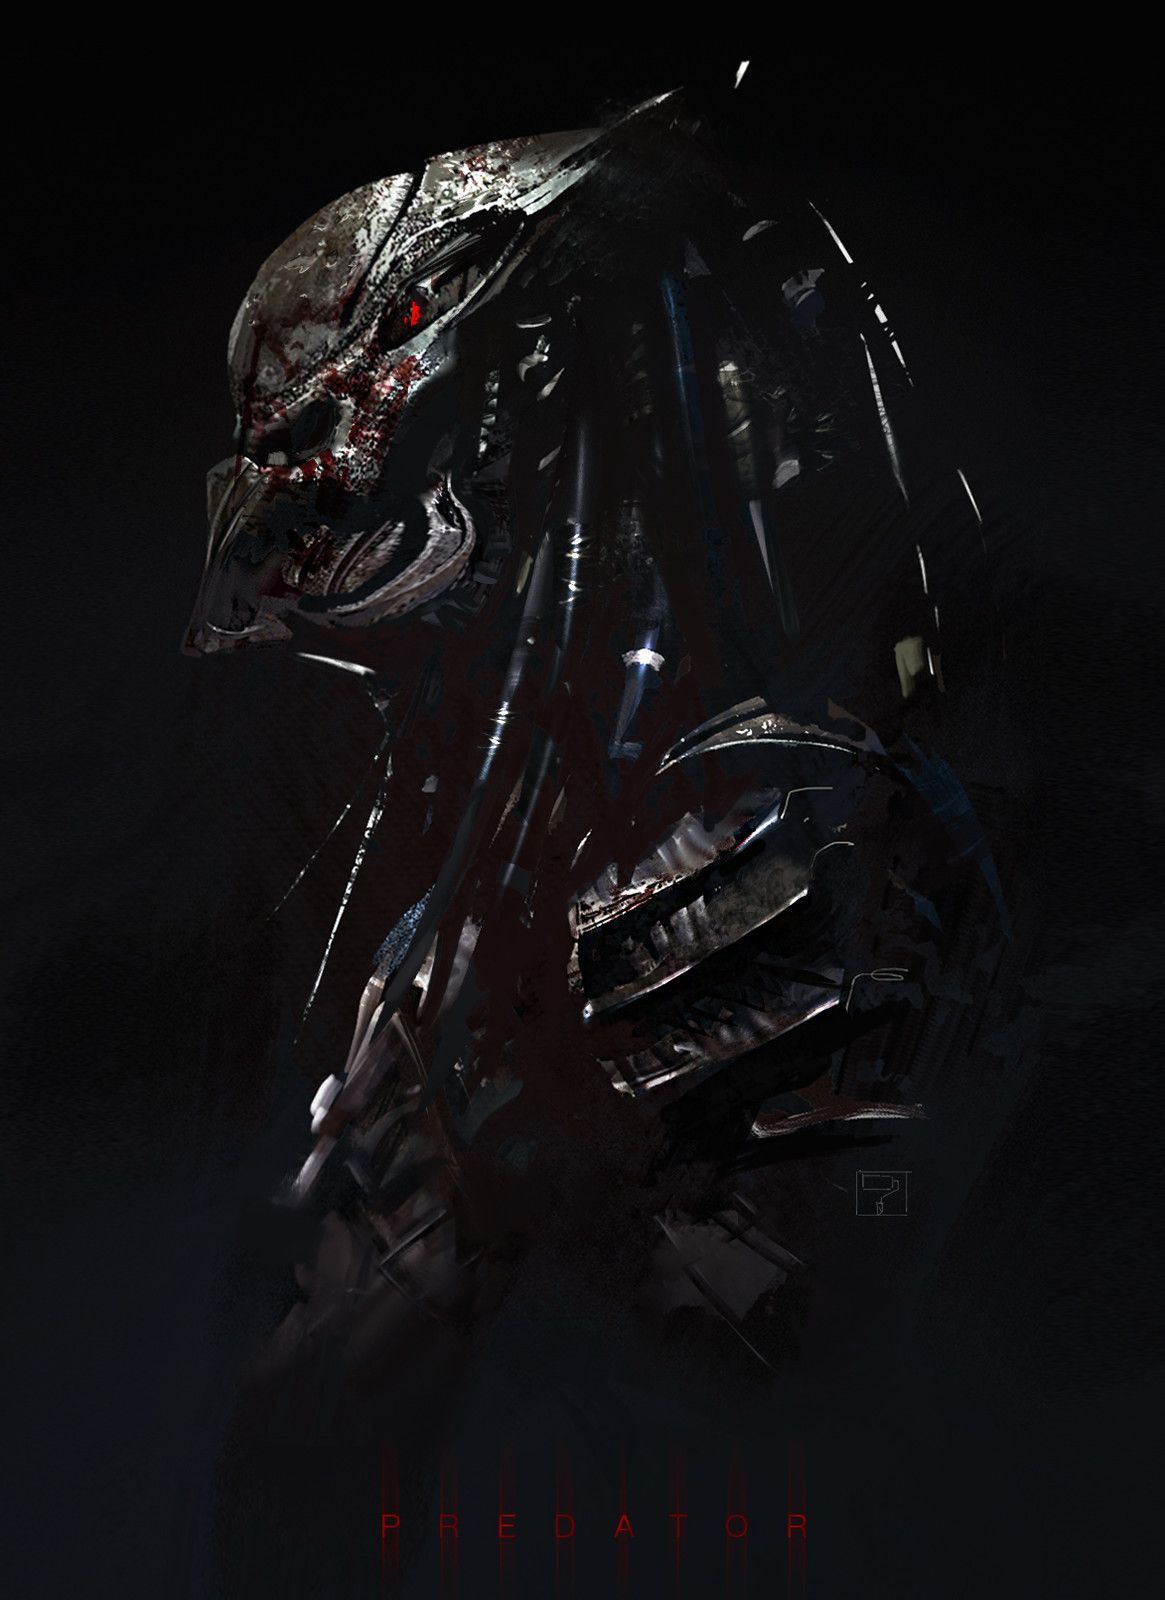 Predator Bio Mask Design Artwork MPlYy. Predator Movie, Predator Artwork, Predator Alien Art